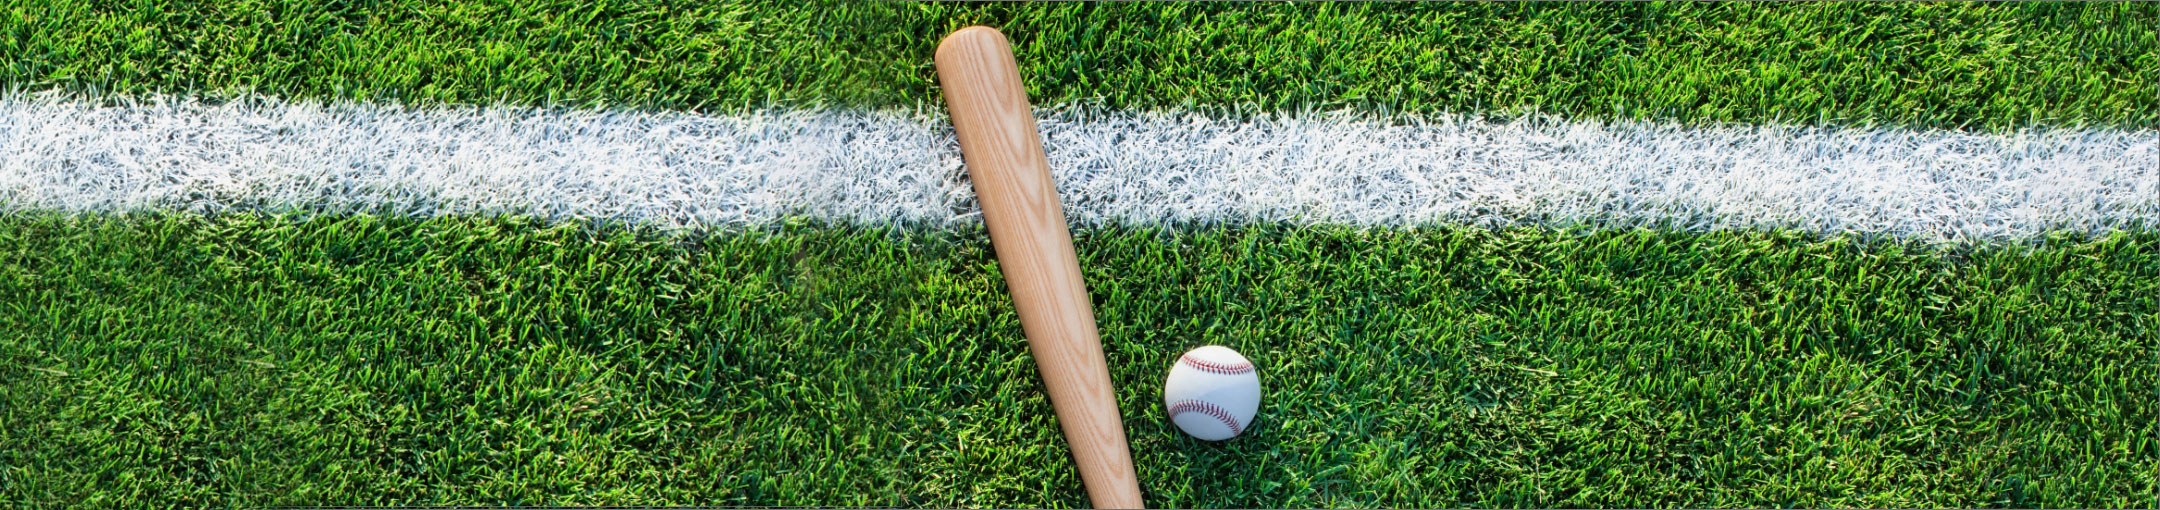 a baseball bat and ball on a field